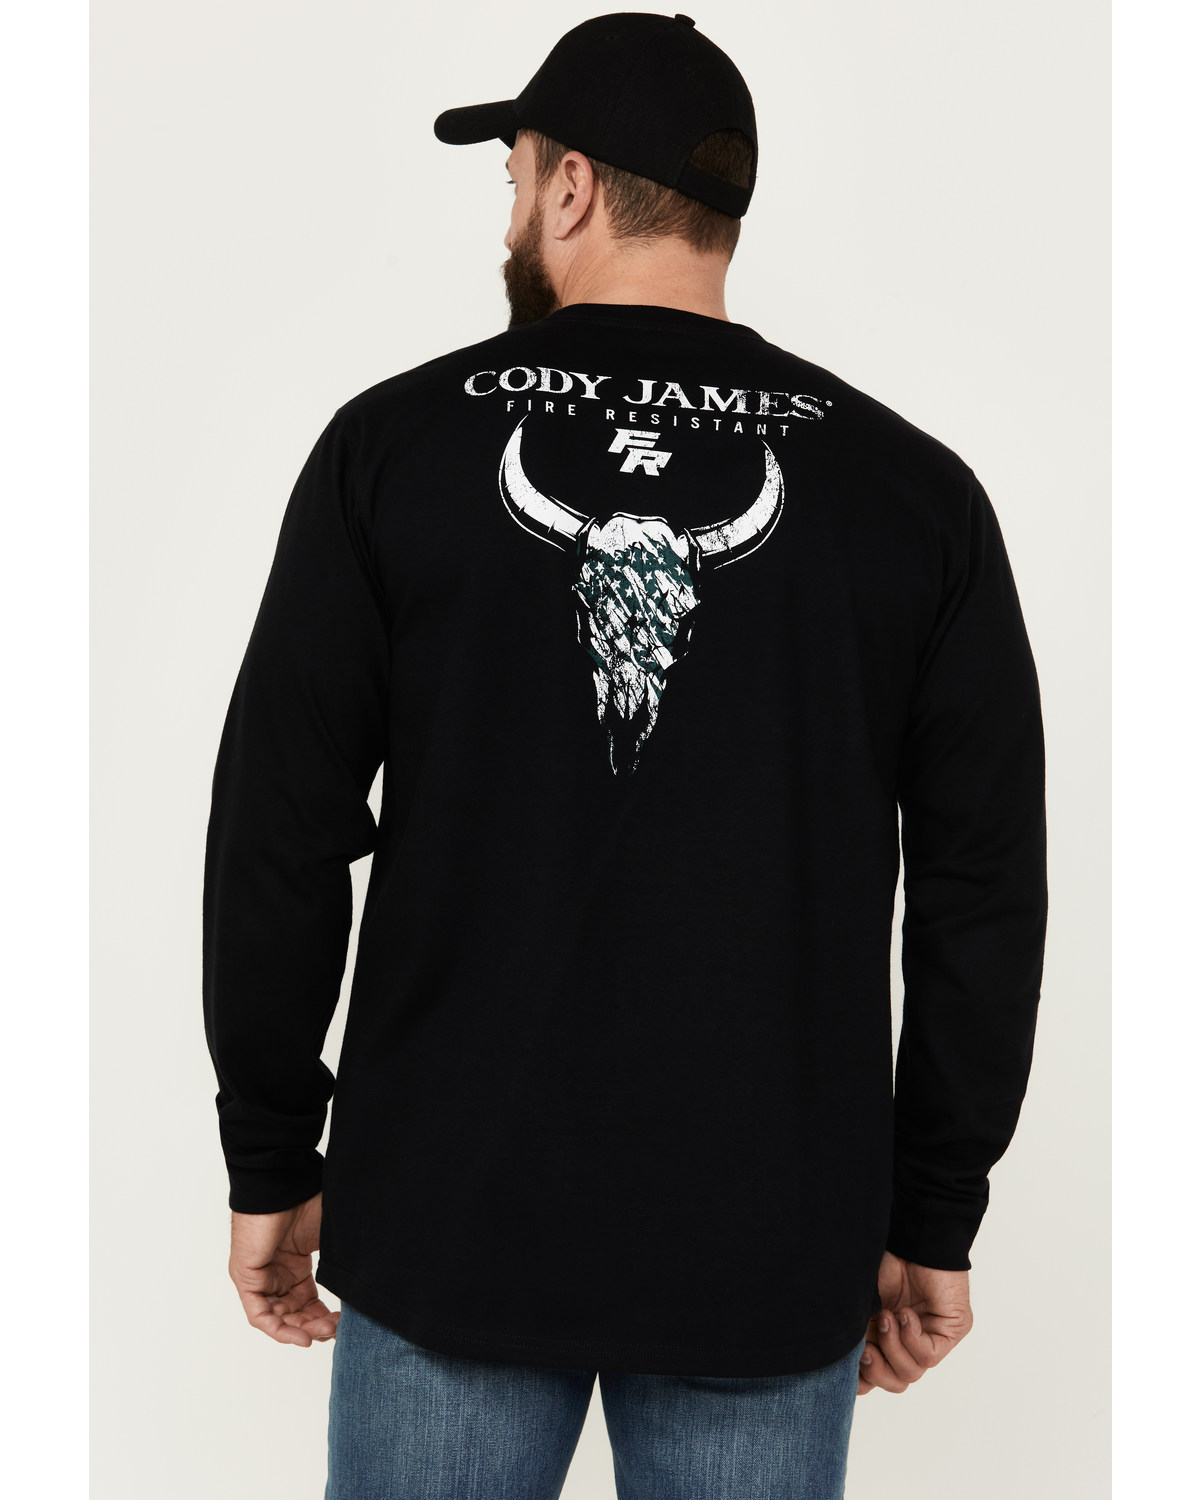 Cody James Men's FR Graphic Long Sleeve Work T-Shirt